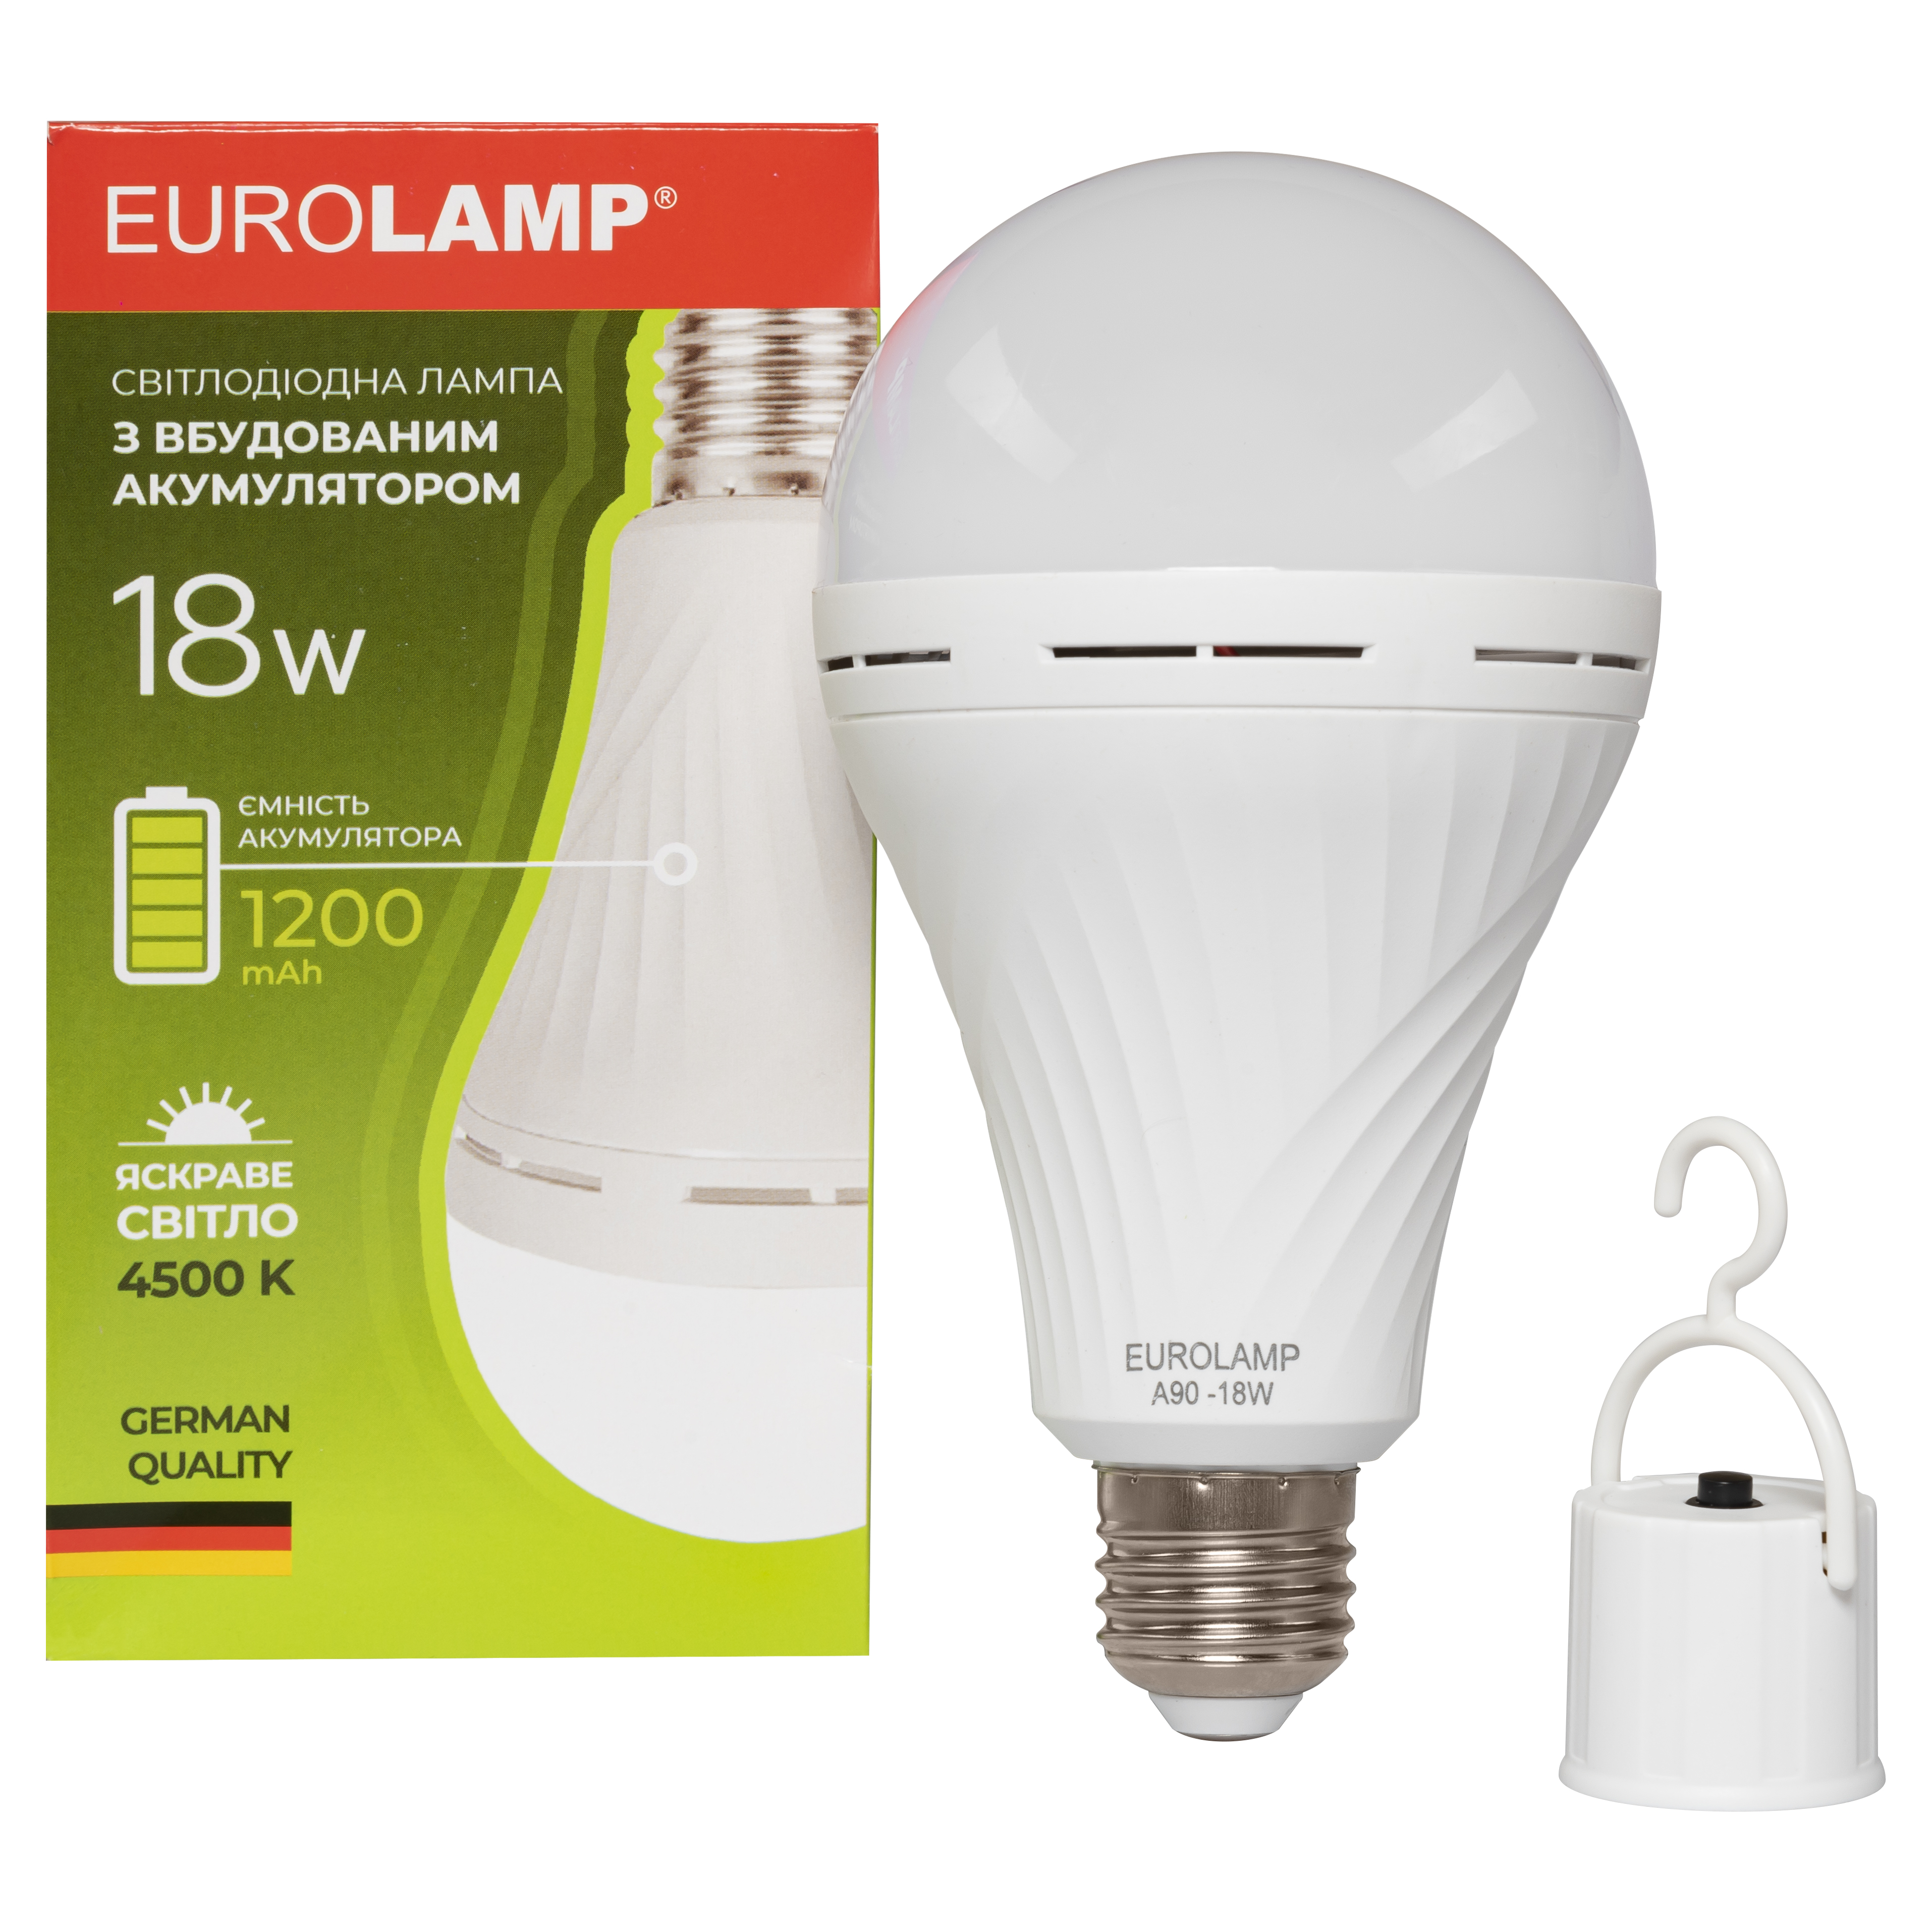 Цена светодиодная лампа форма классическая Eurolamp A90 18W 4500K 220V E27 (LED-A90-18274(EM)) в Киеве